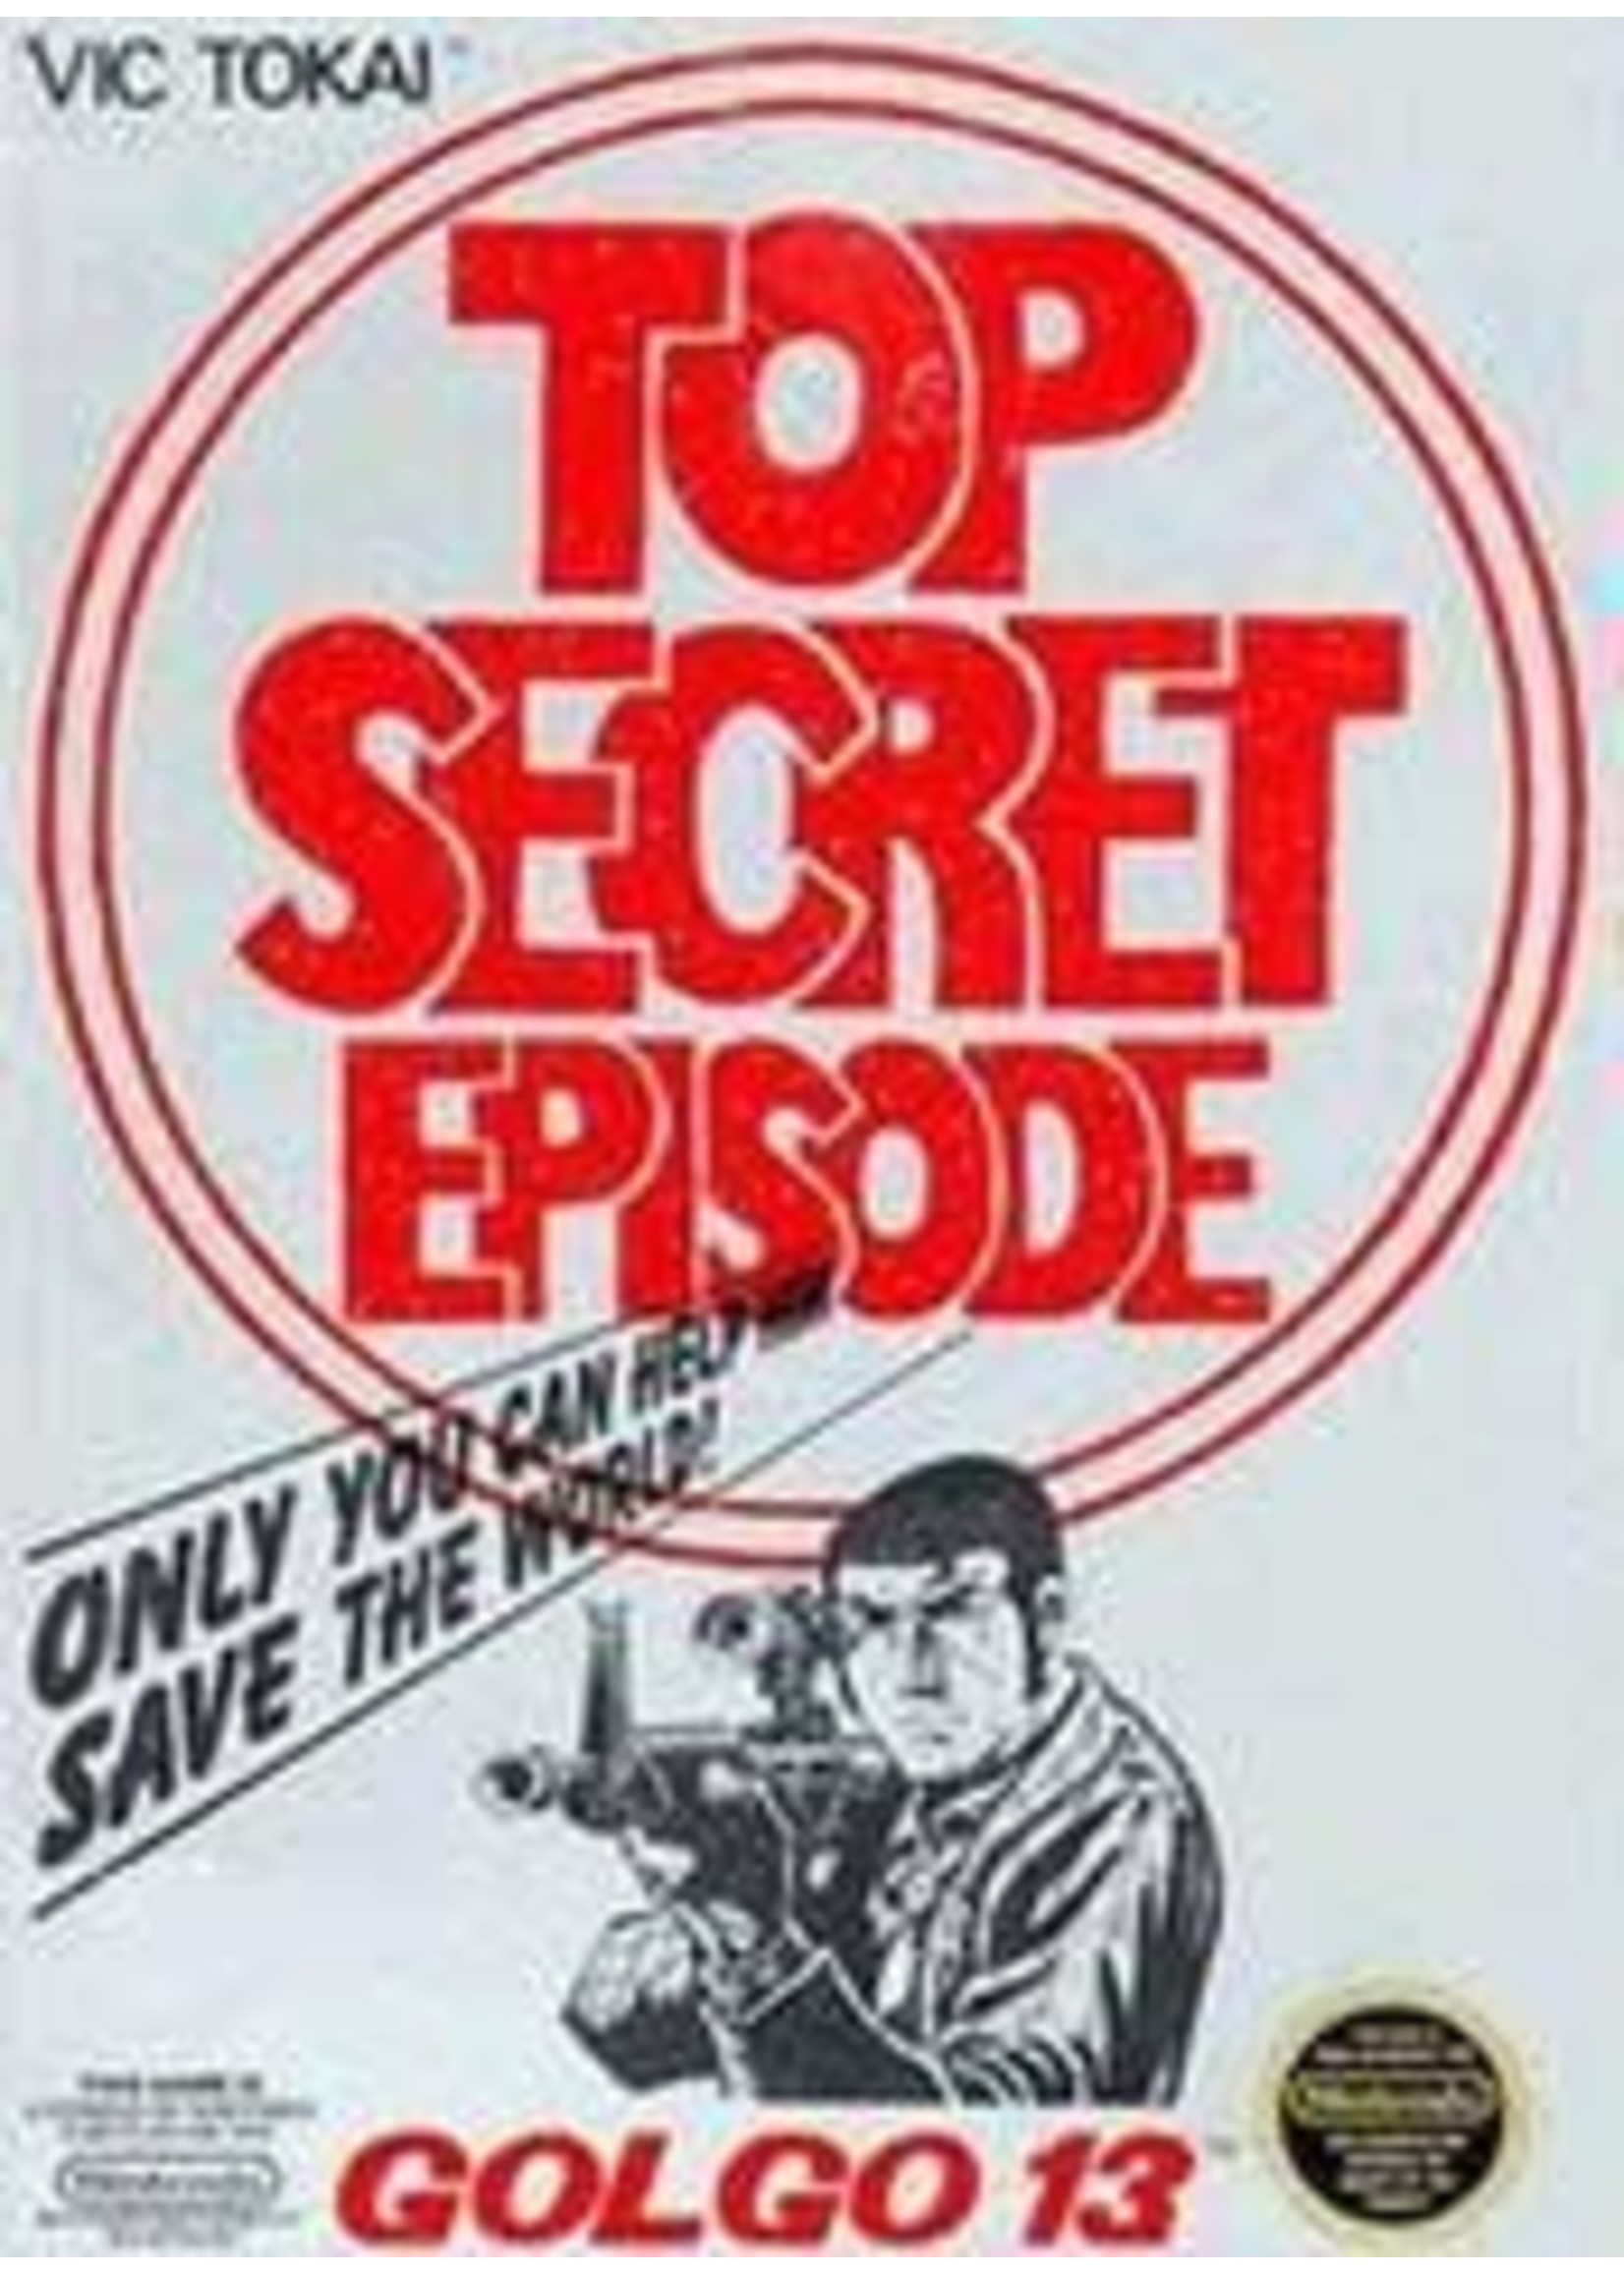 Golgo 13 Top Secret Episode NES CART ONLY